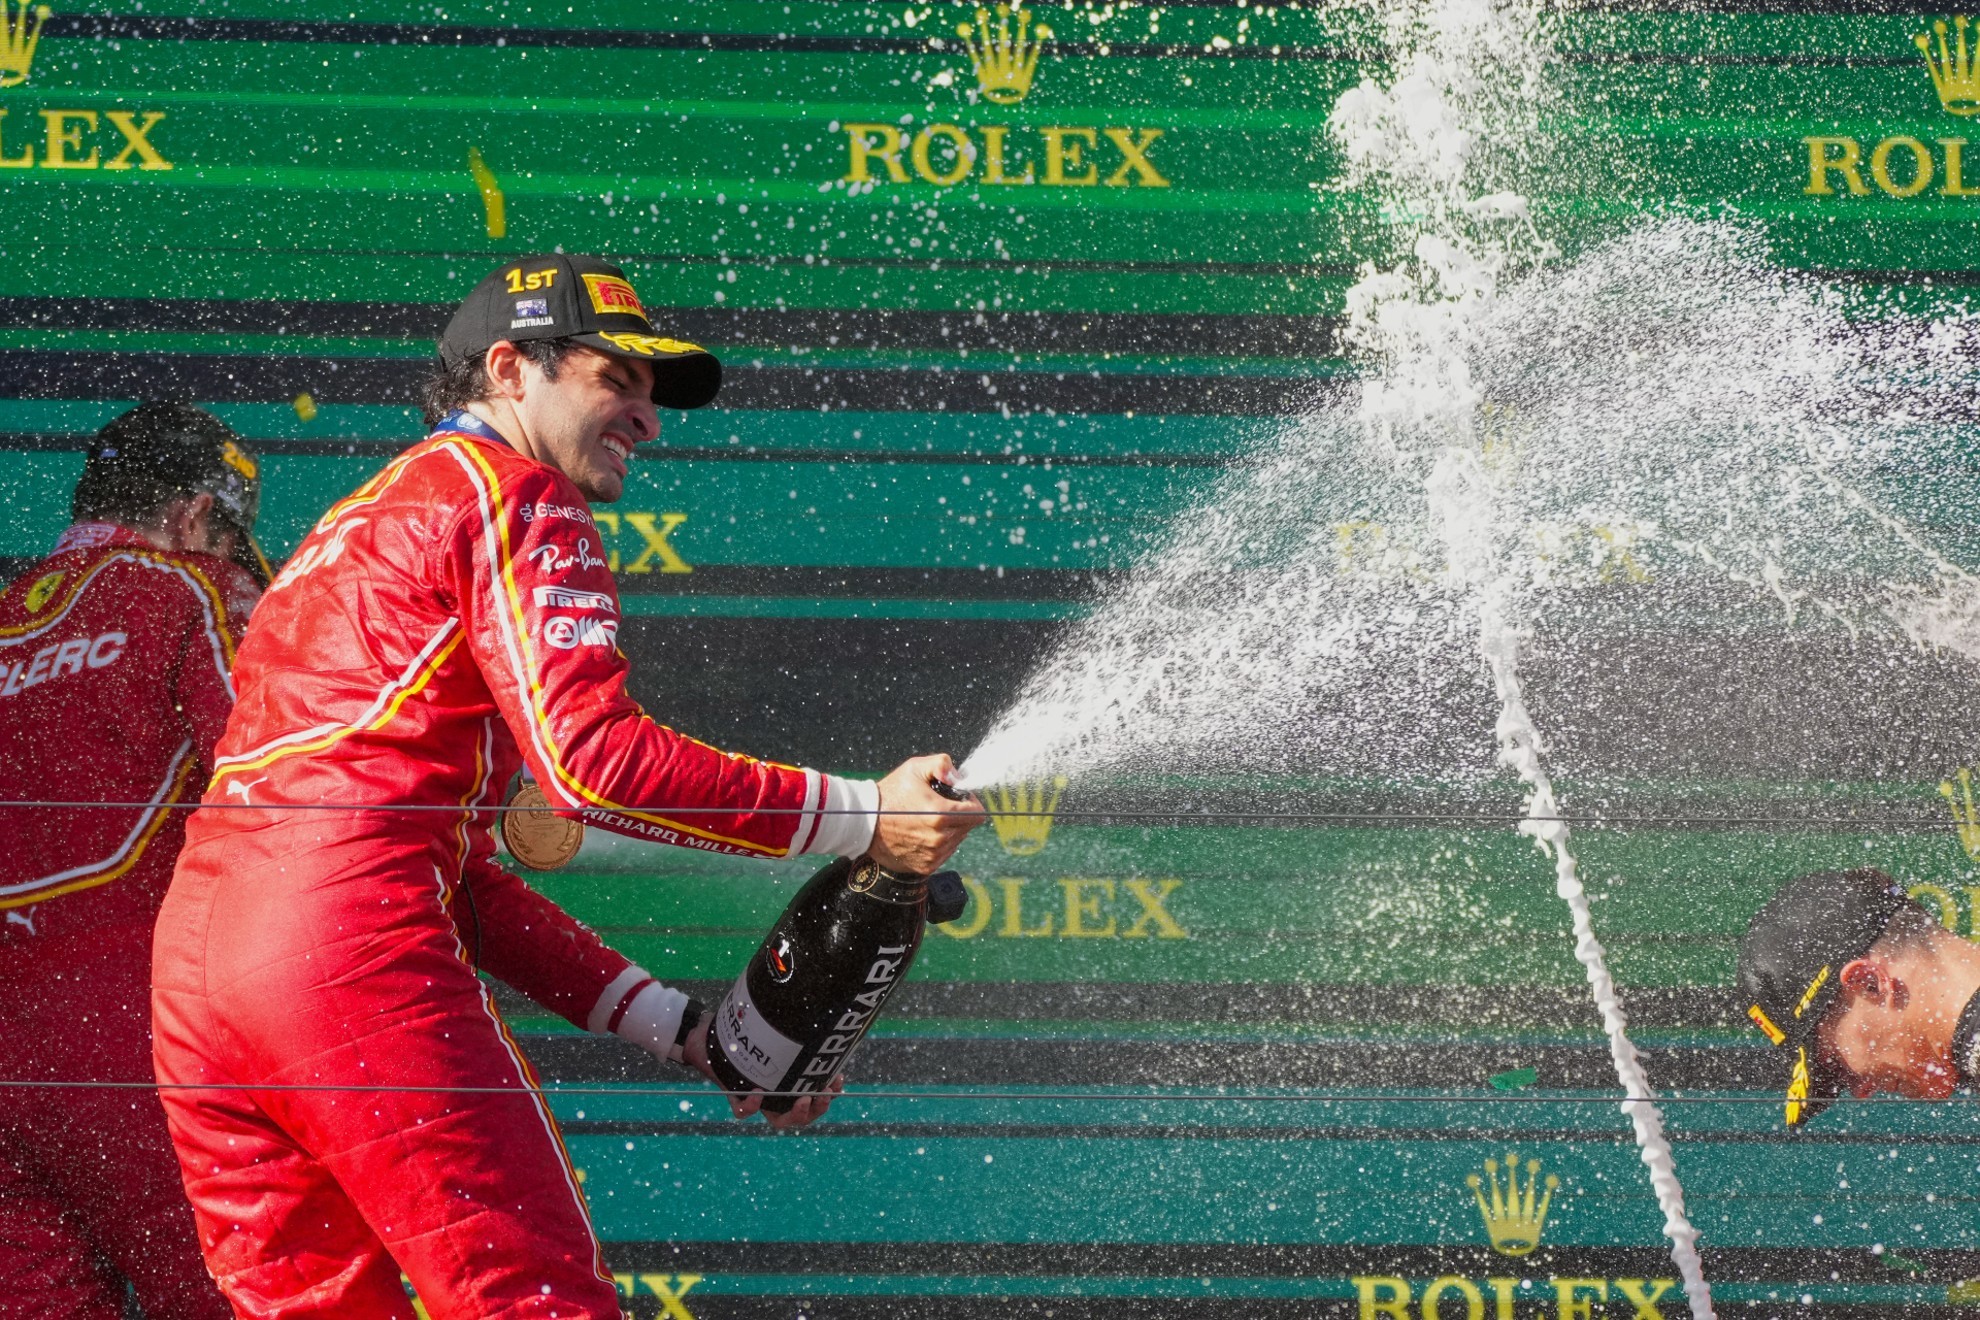 Ferrari driver Carlos Sainz of Spain sprays champagne as he celebrates after winning the Australian Formula One Grand Prix.